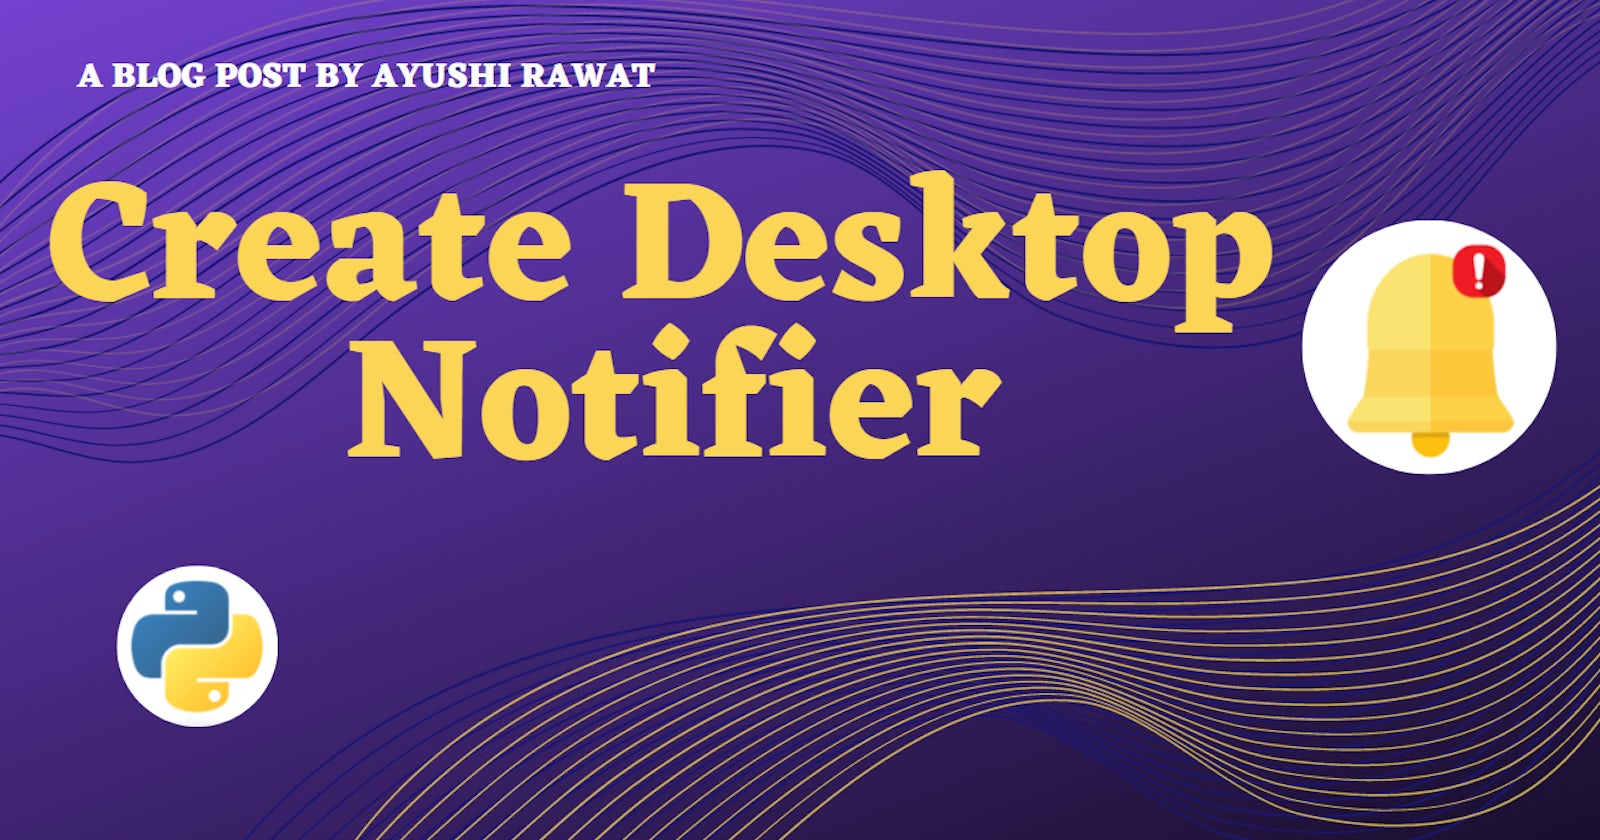 Create Desktop Notifier using Python